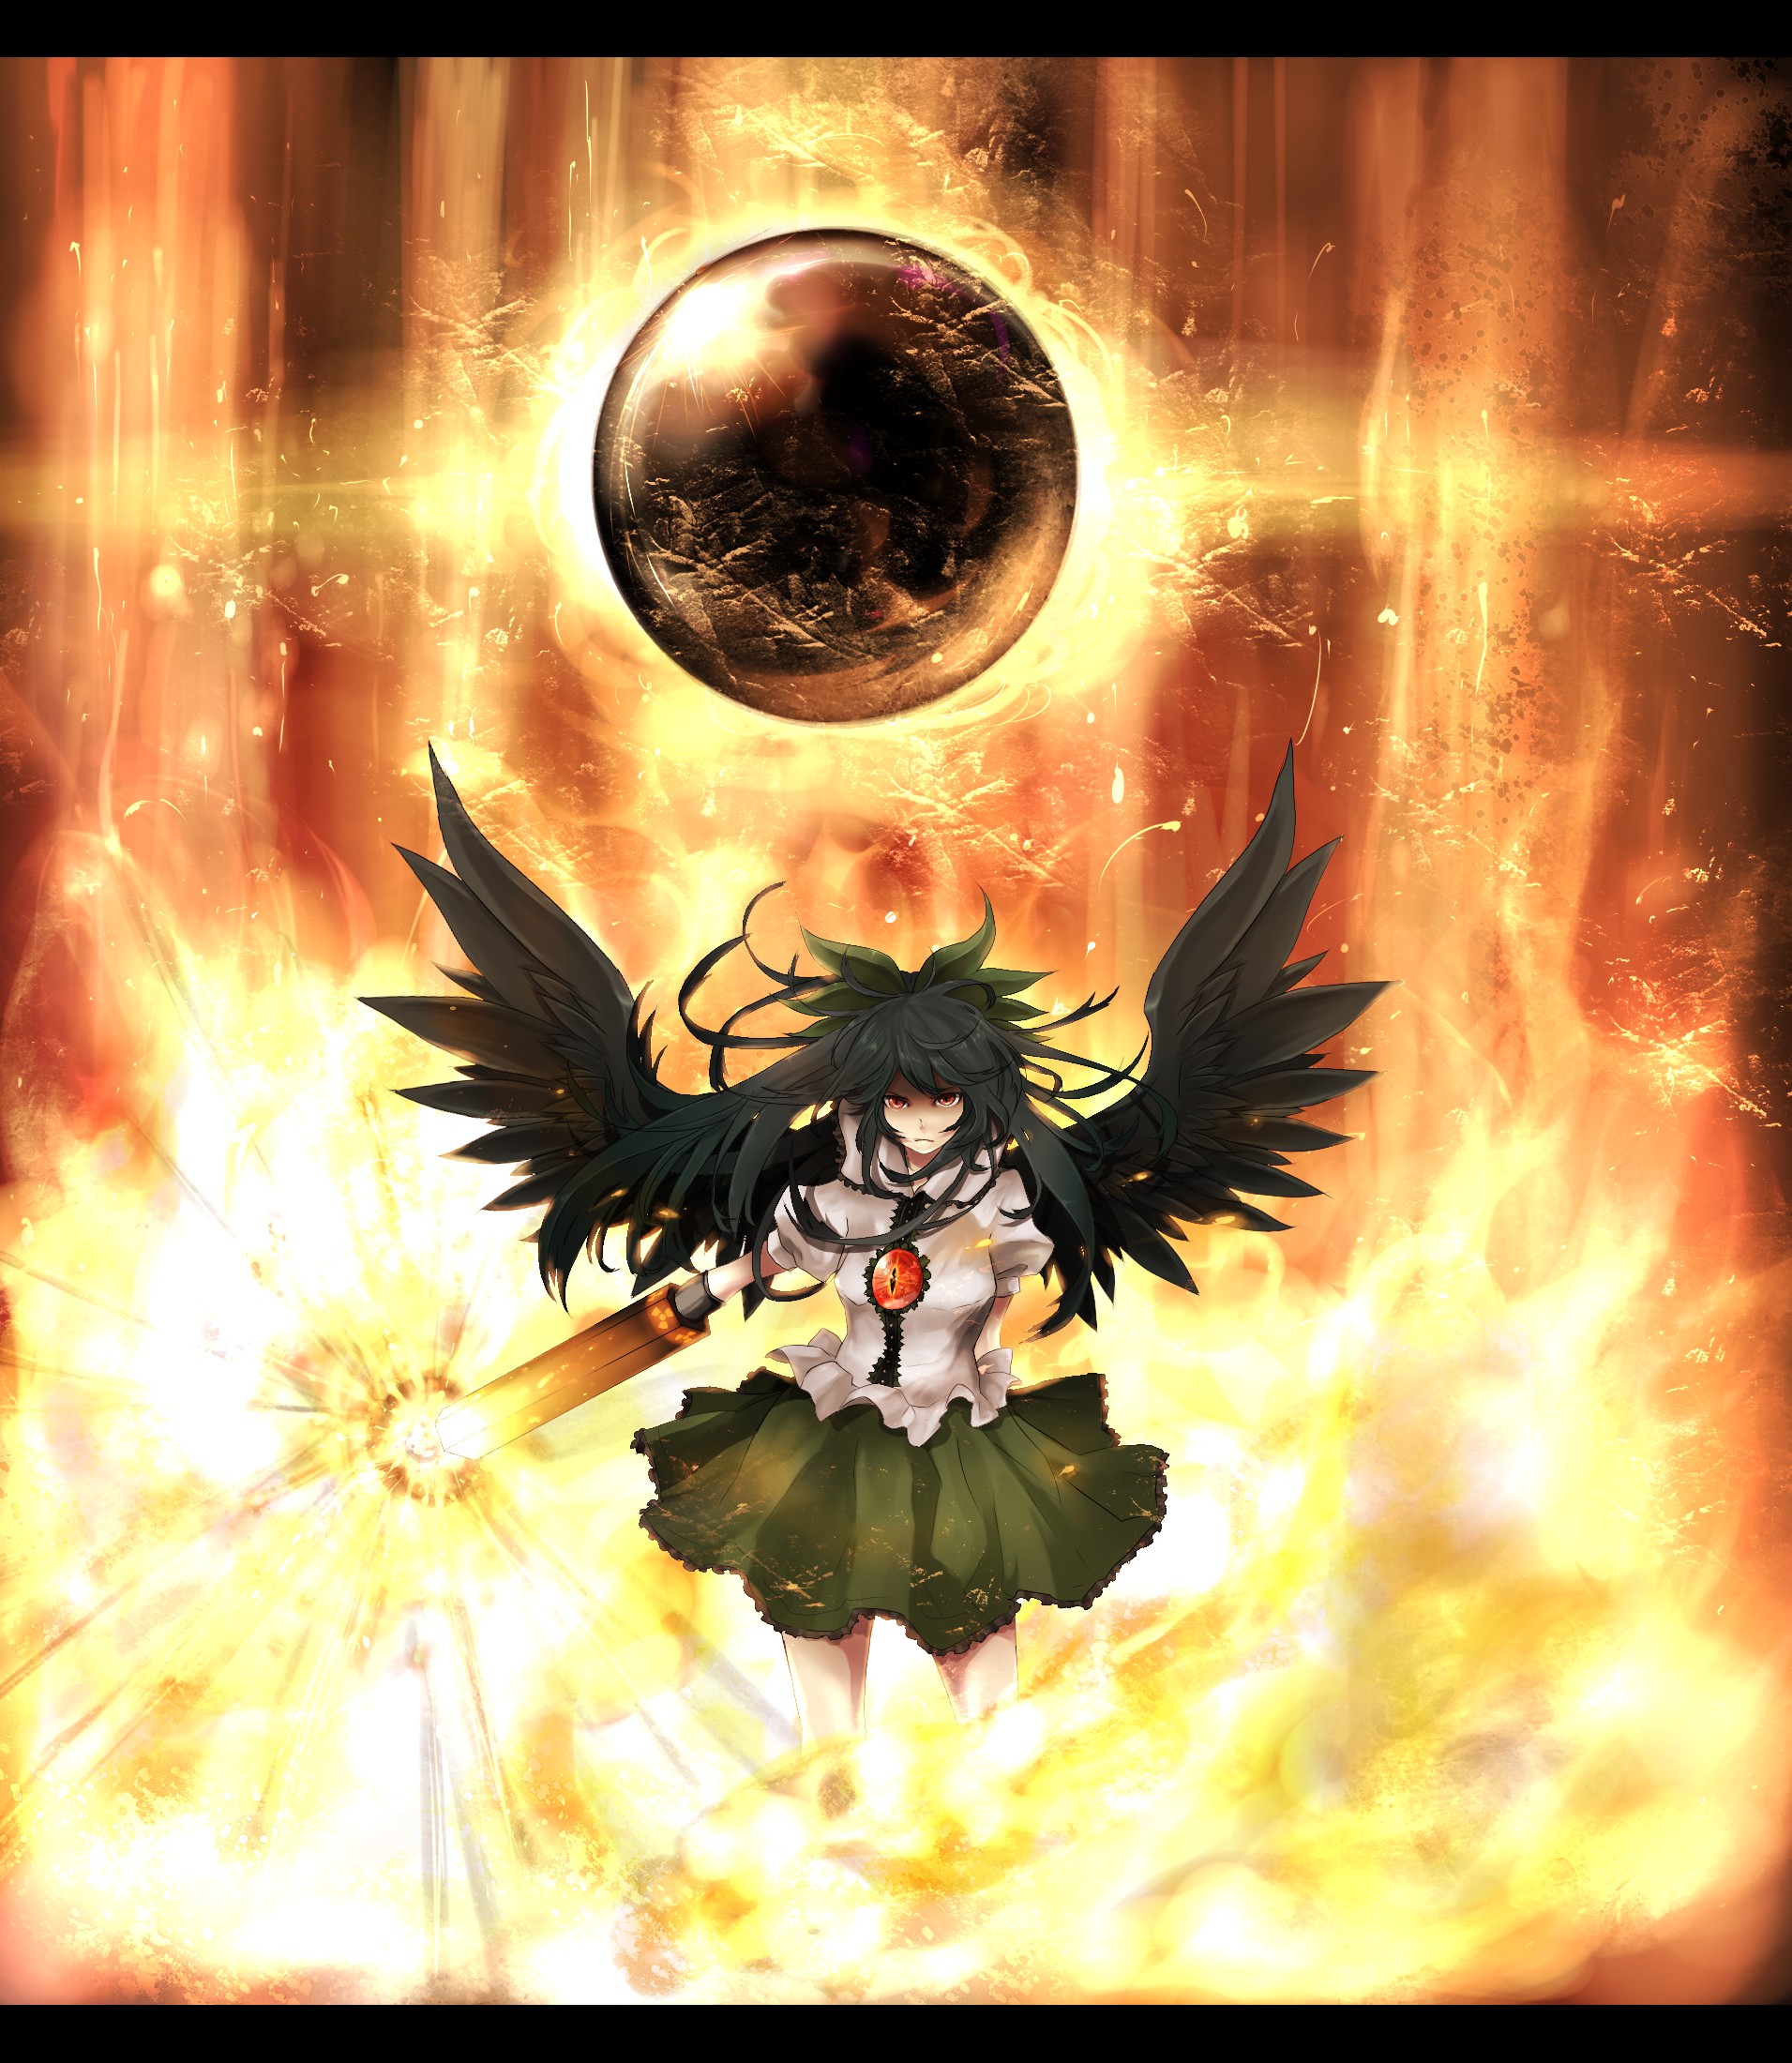 Touhou, Reiuji Utsuho, Green, Skirt, Red eyes, Wings, Nuclear, Flares, Fire, Neota Wallpaper